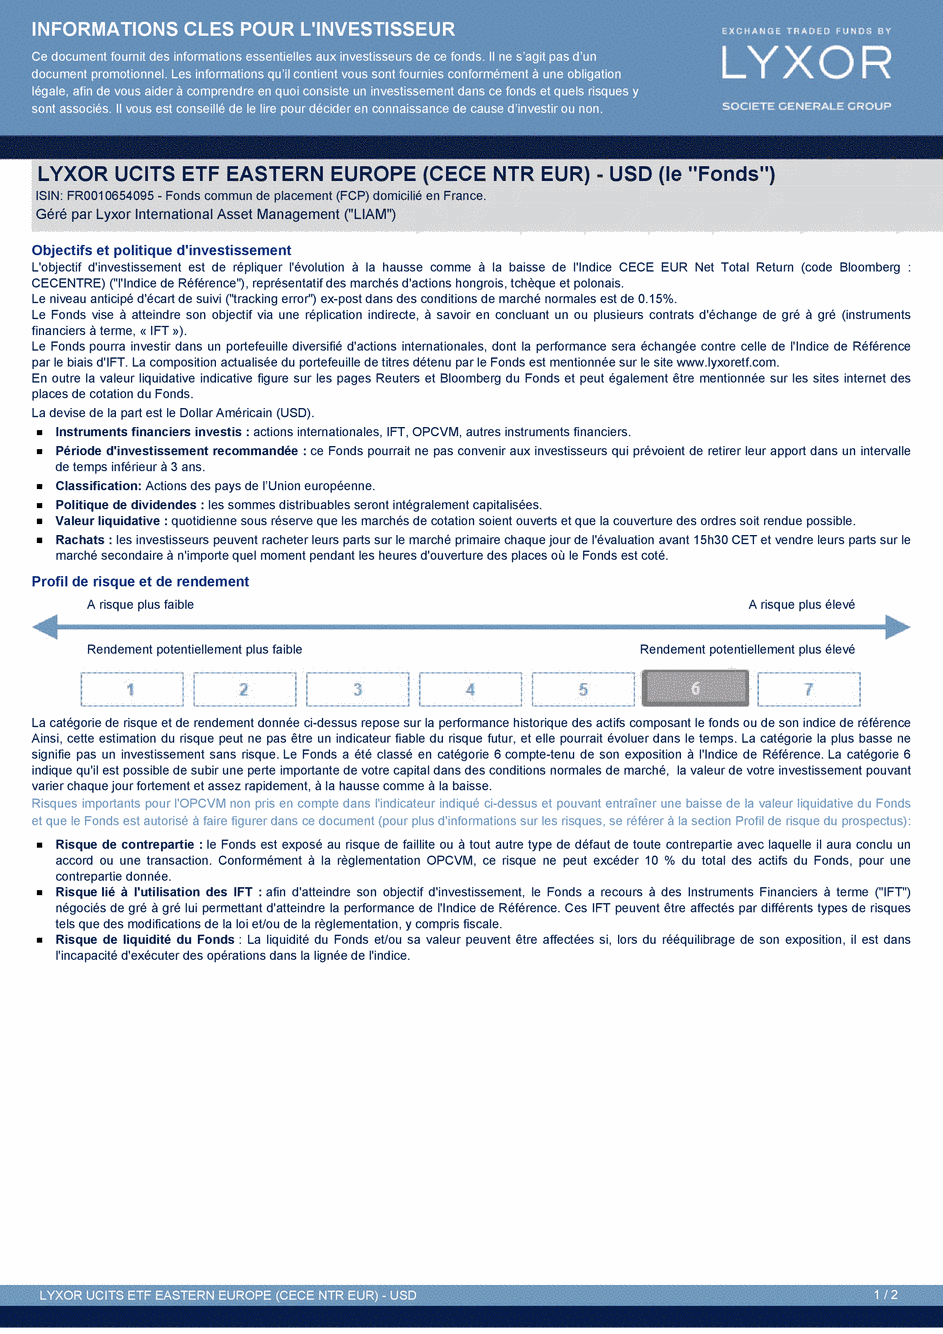 DICI LYXOR UCITS ETF EASTERN EUROPE (CECE NTR EUR) USD - 08/09/2015 - Français